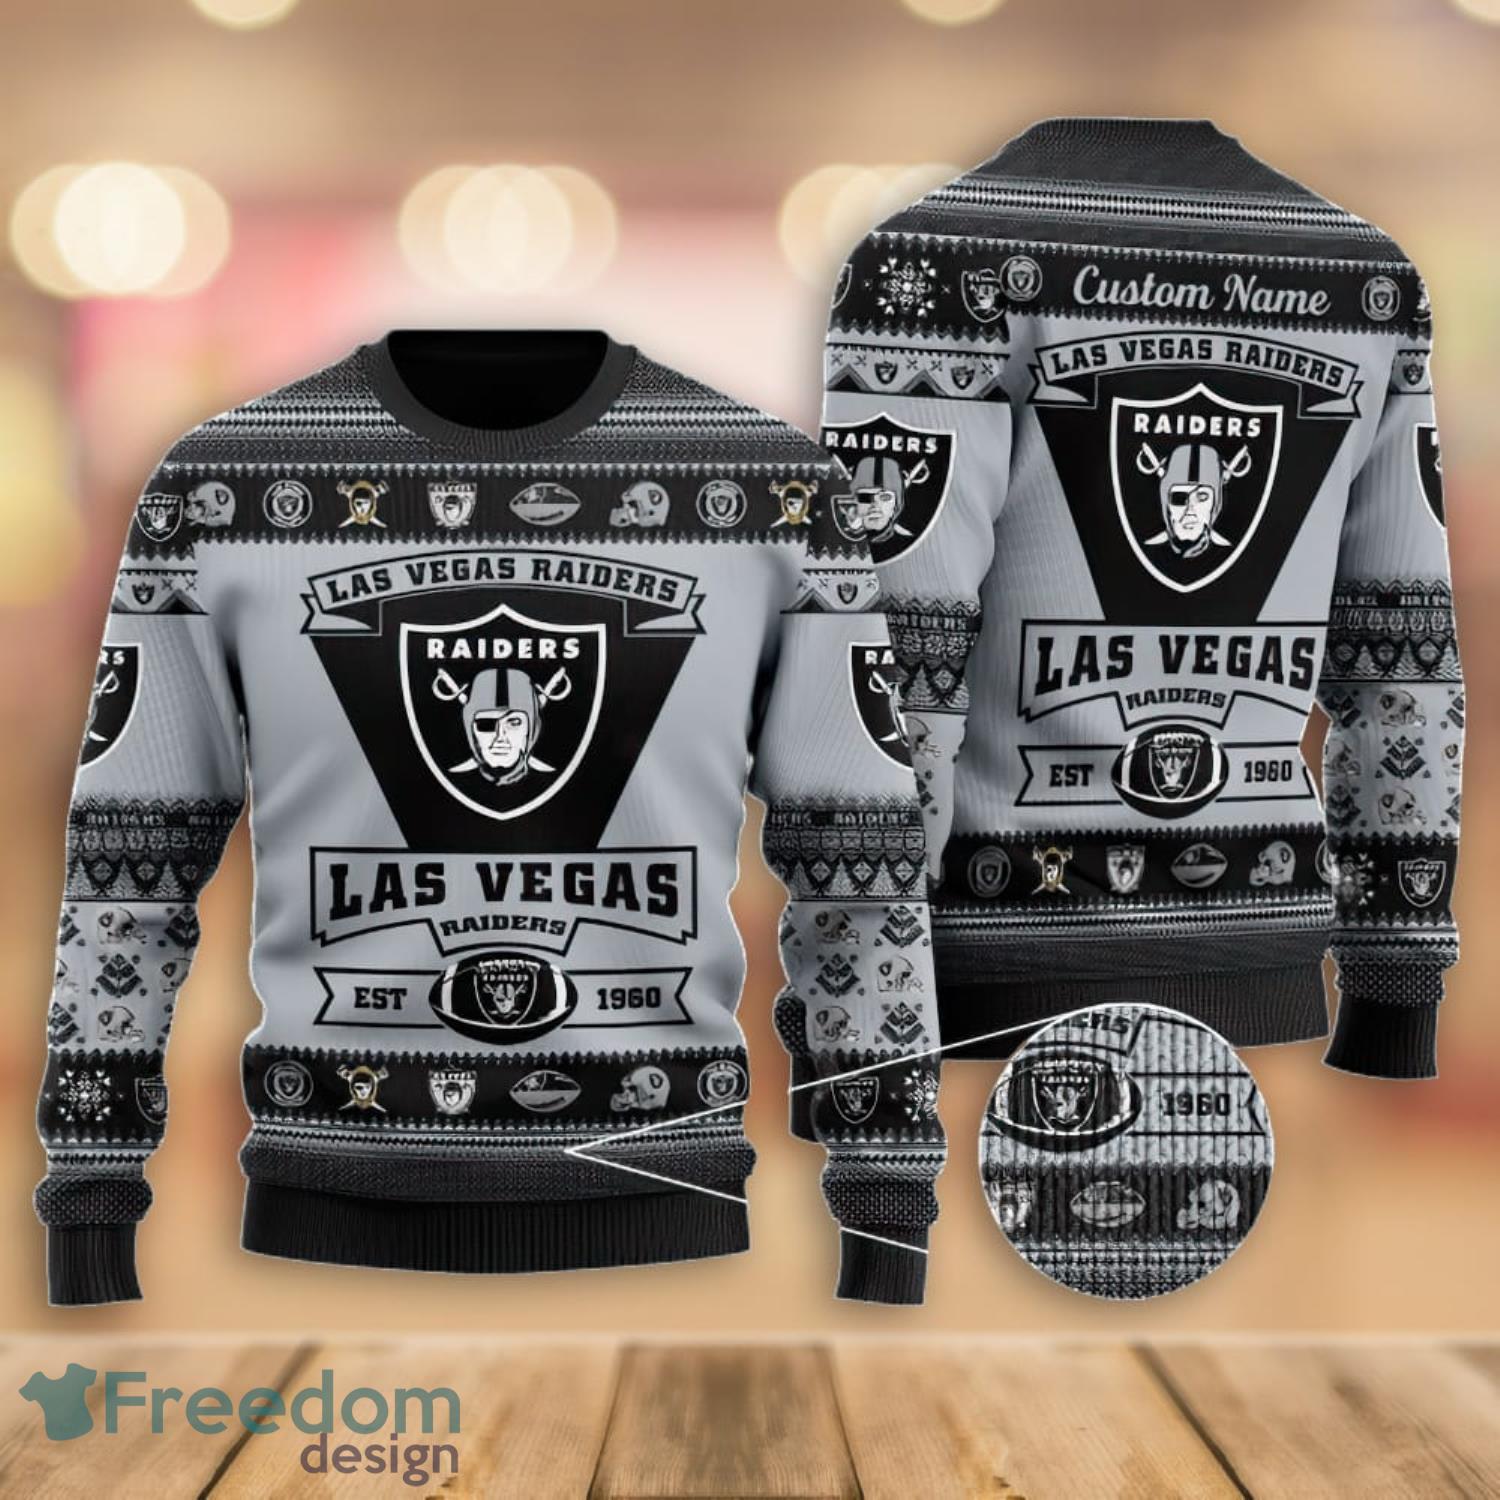 Las Vegas Raiders Football Team Logo Custom Name Full-print Knitted Sweater  - Freedomdesign